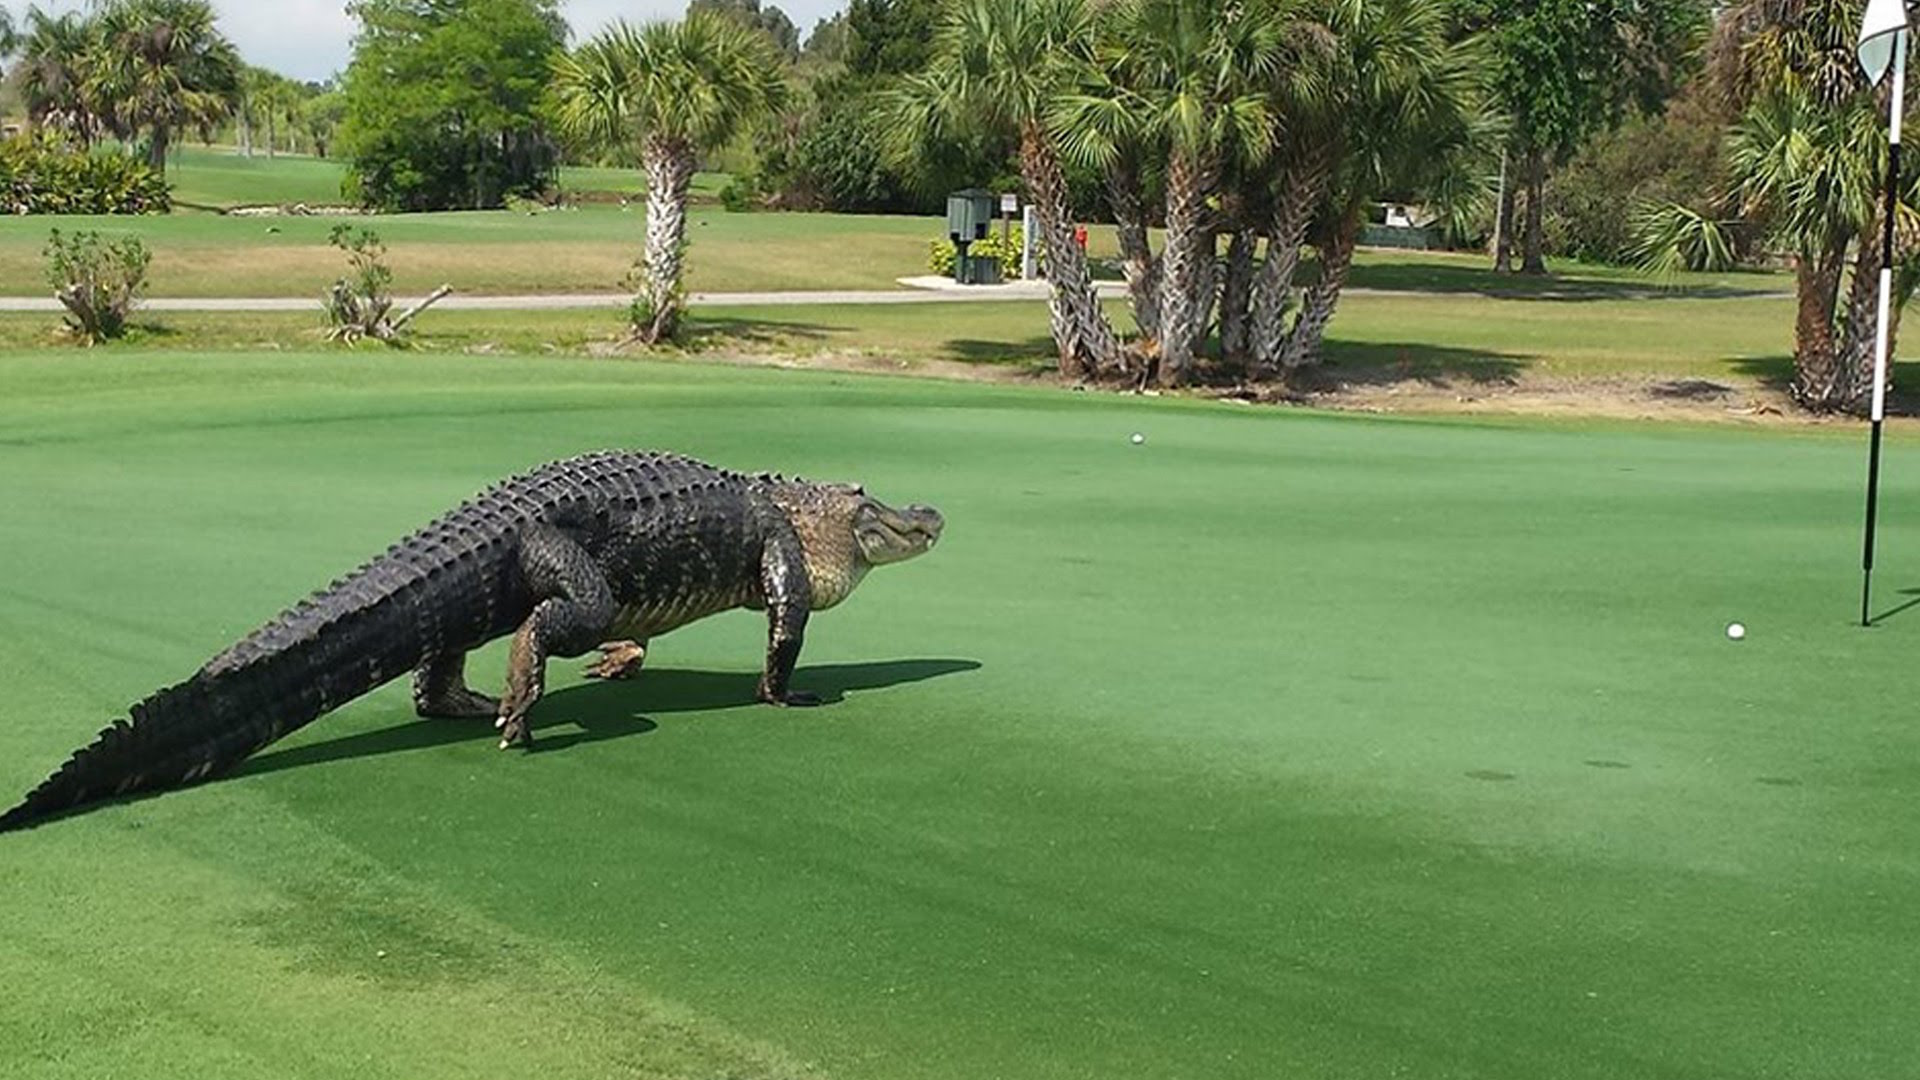 Man fights off alligator with putter - GolfPunkHQ